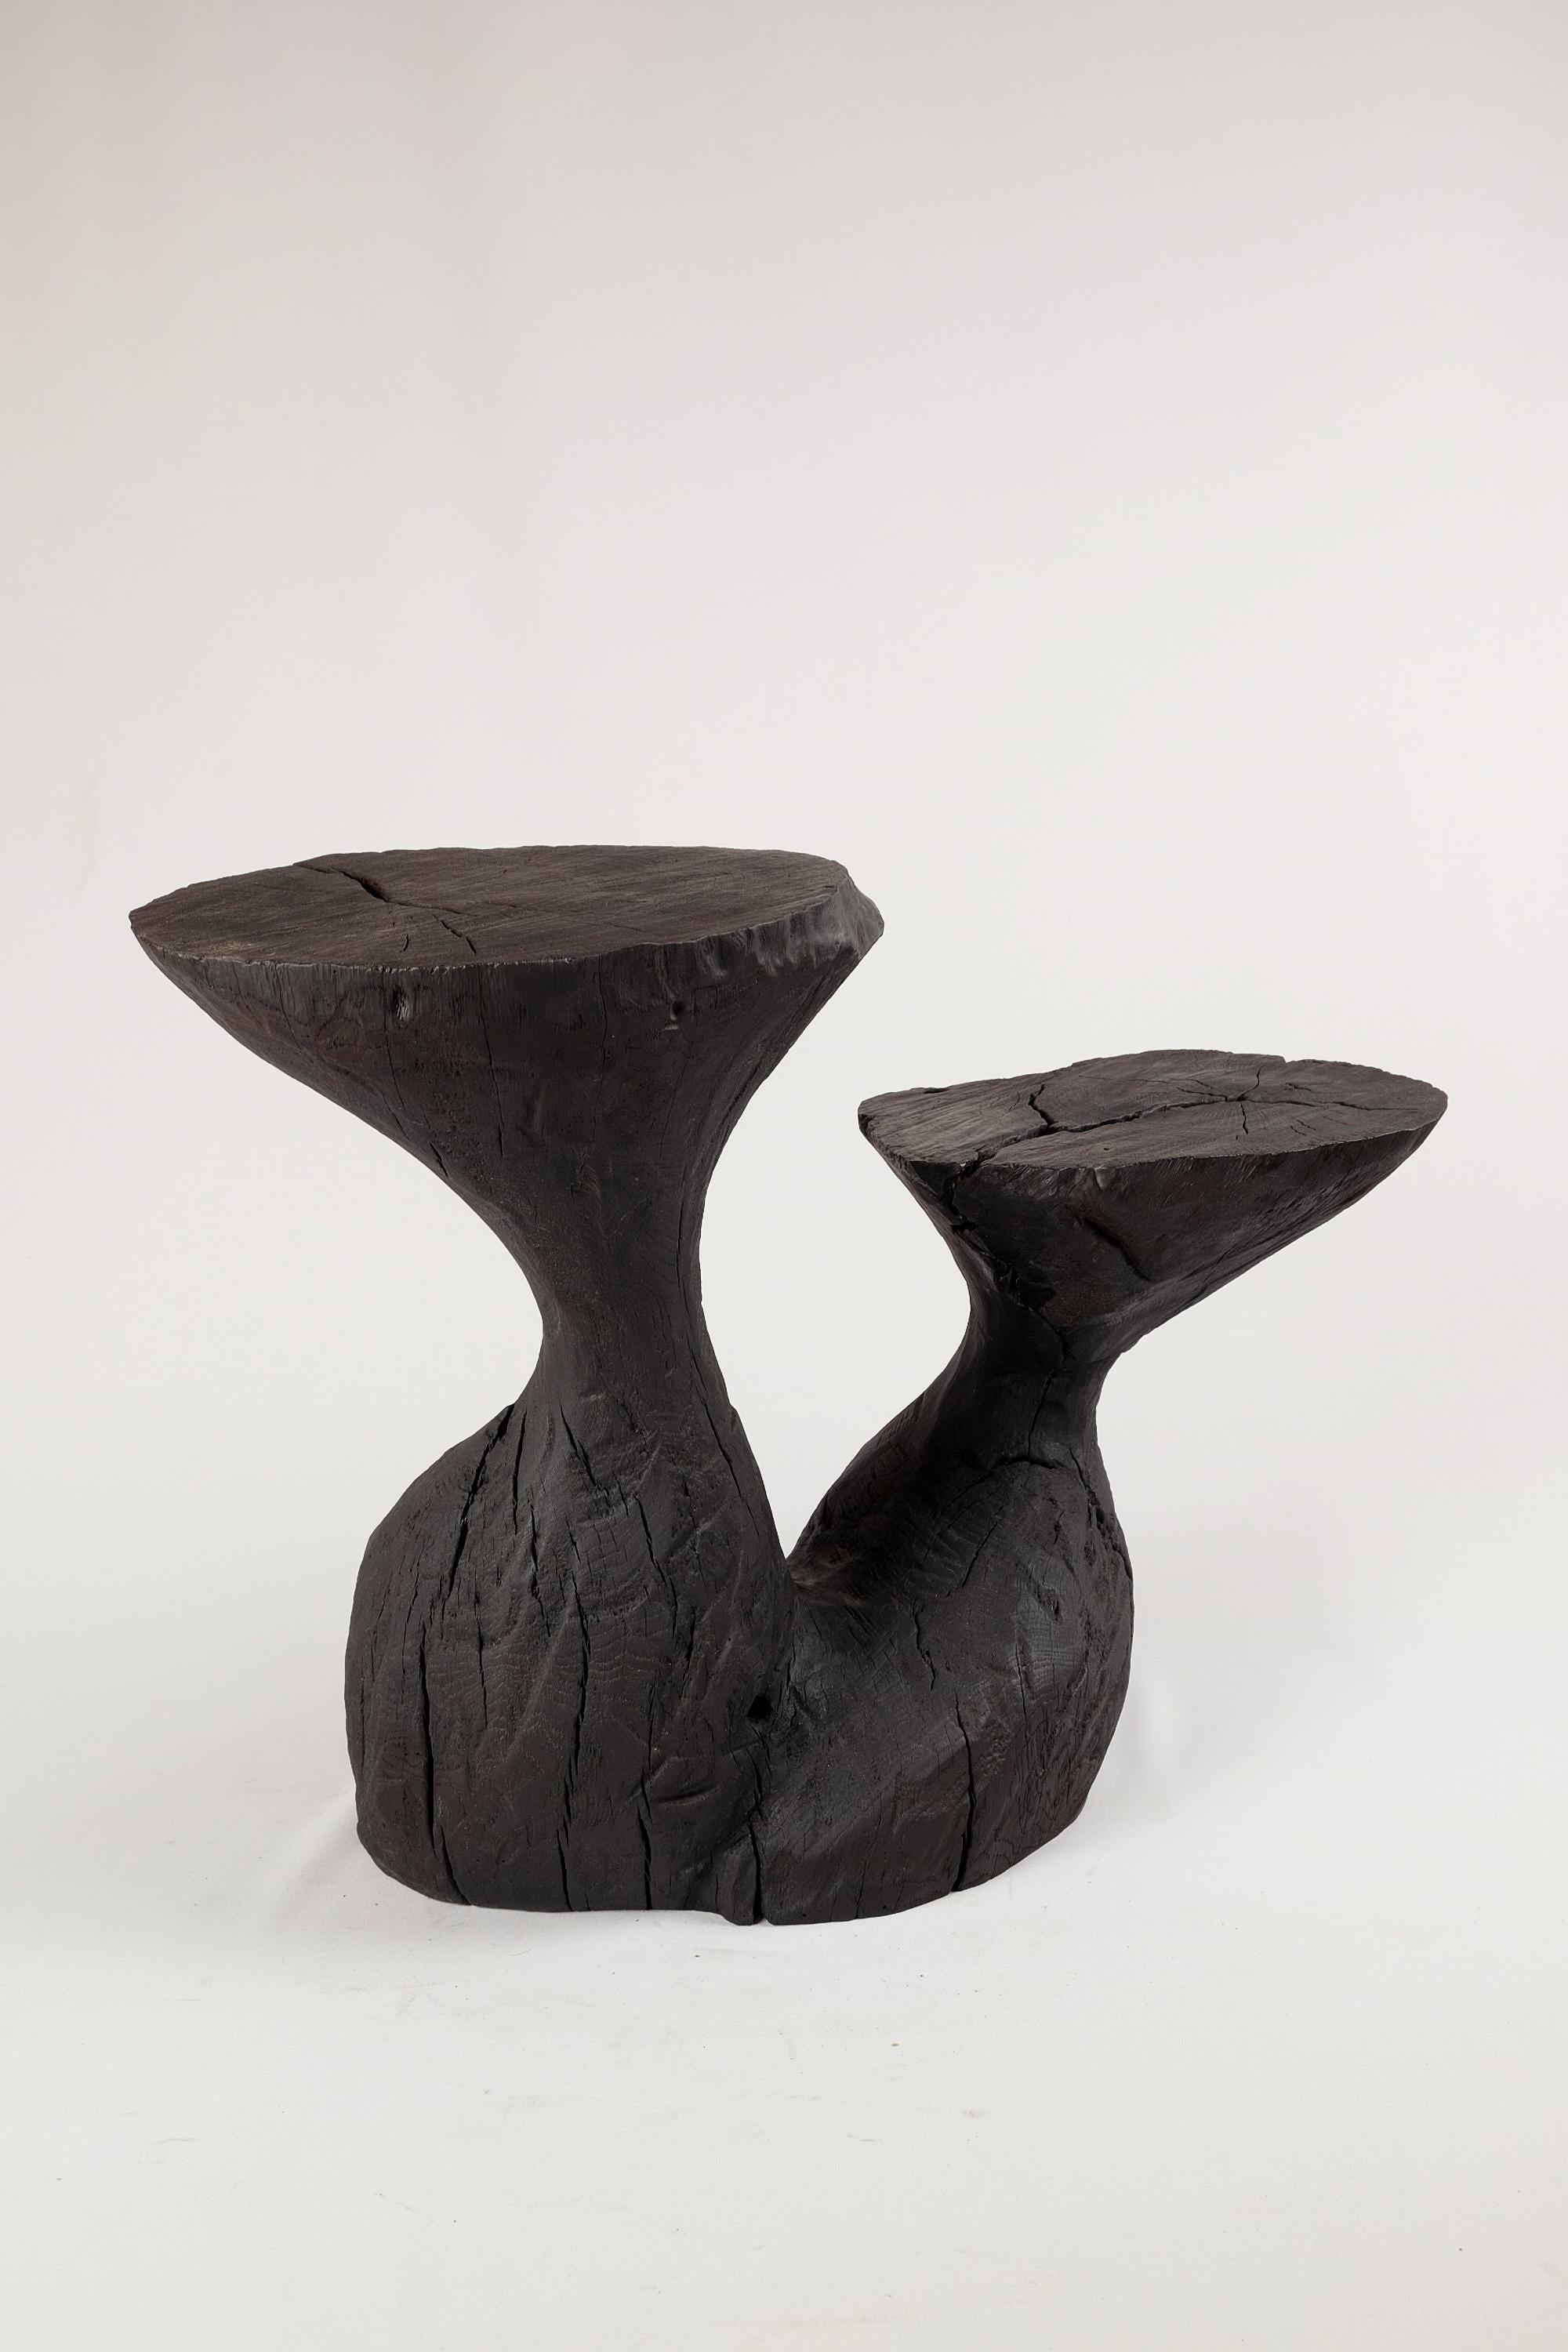 Solid Burnt Wood, Sculptural Side Table, Original Contemporary Design, Logniture 2